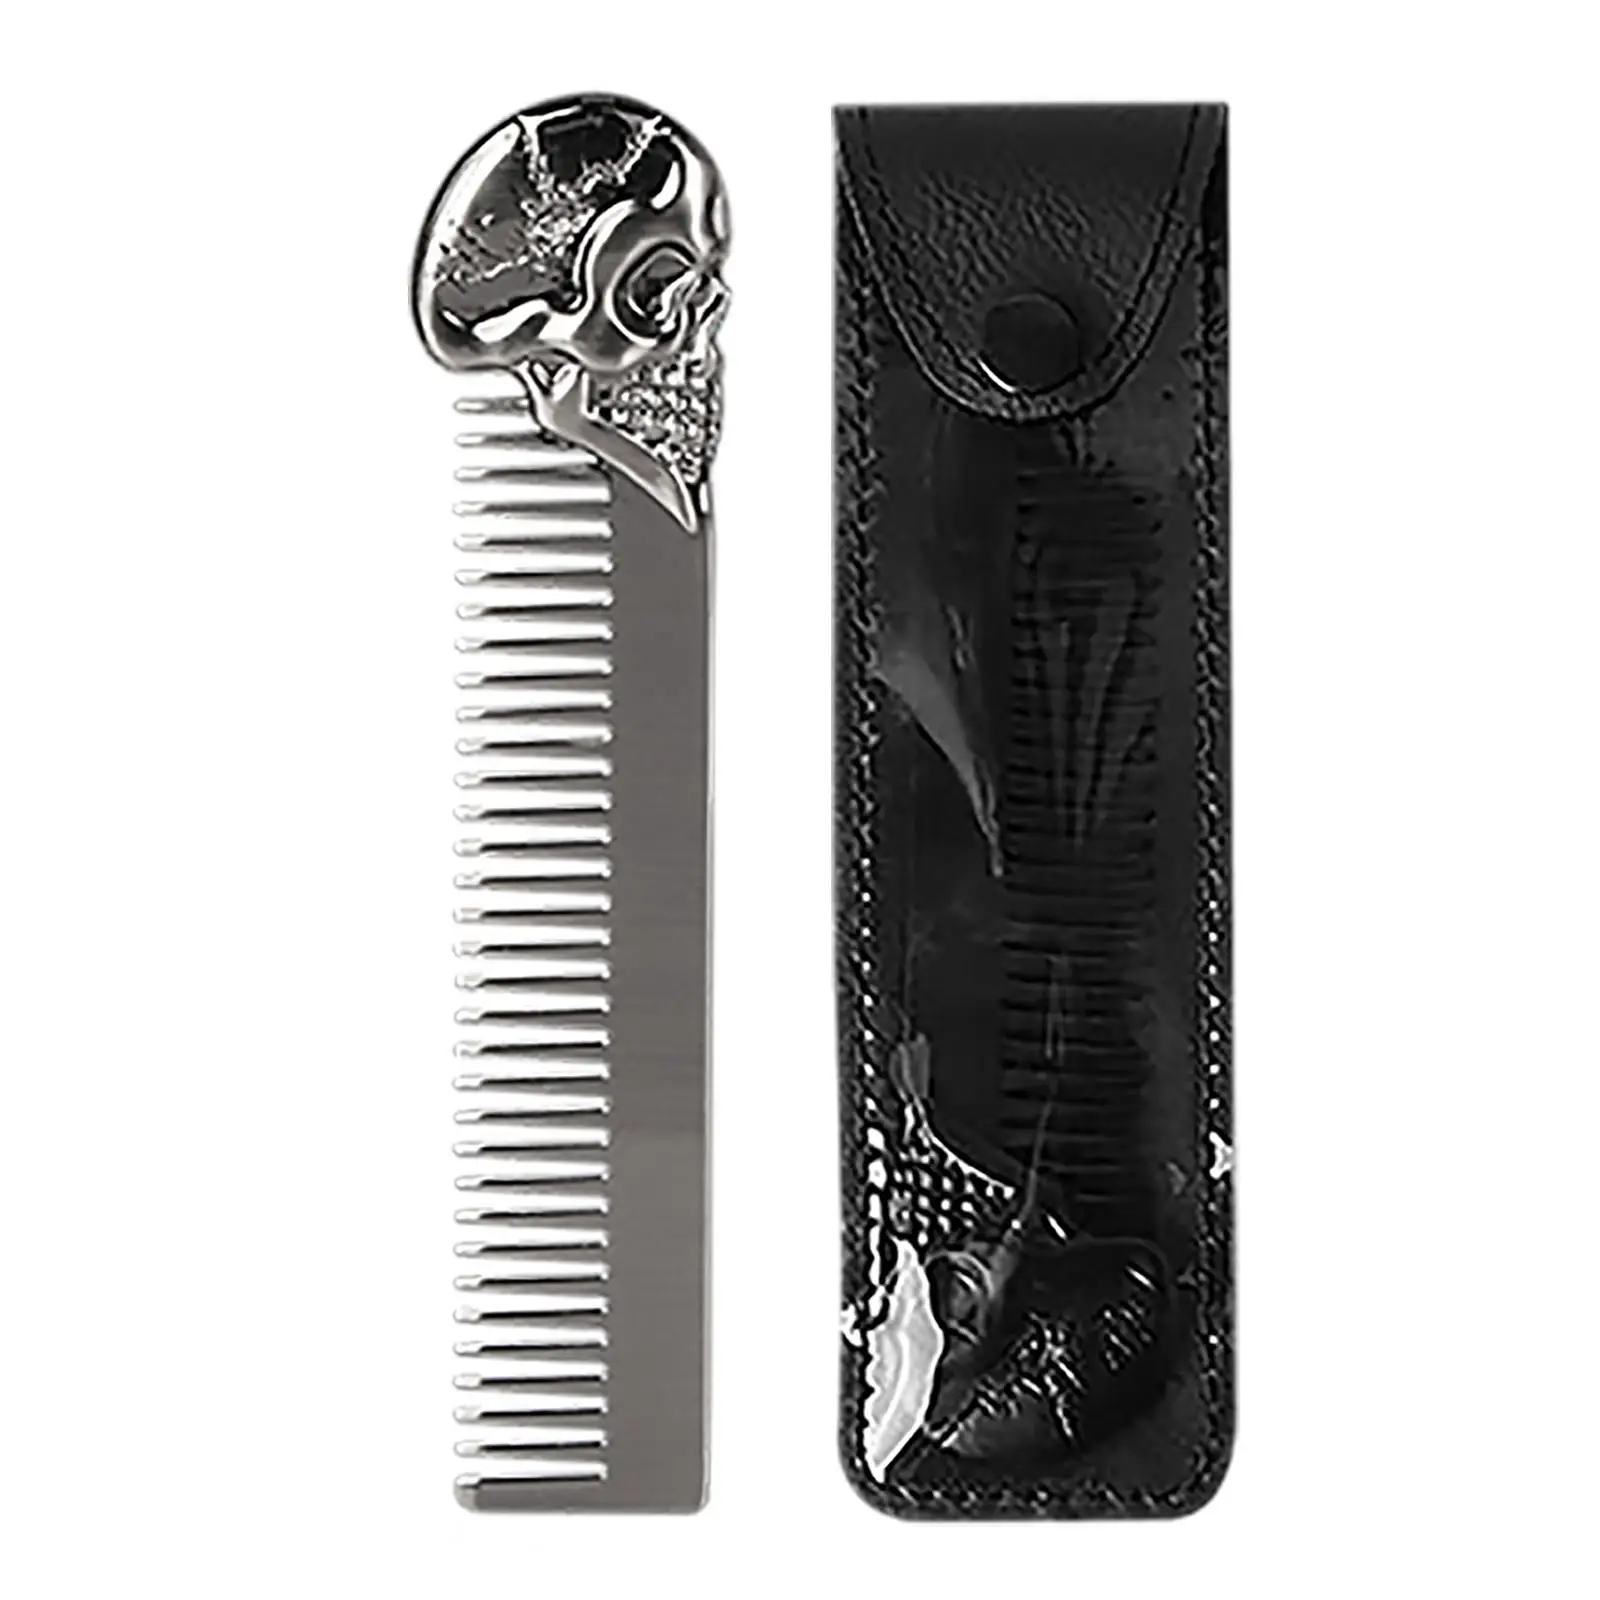 2x Comb for Men Pocket Comb Fine Hairdressing Tool